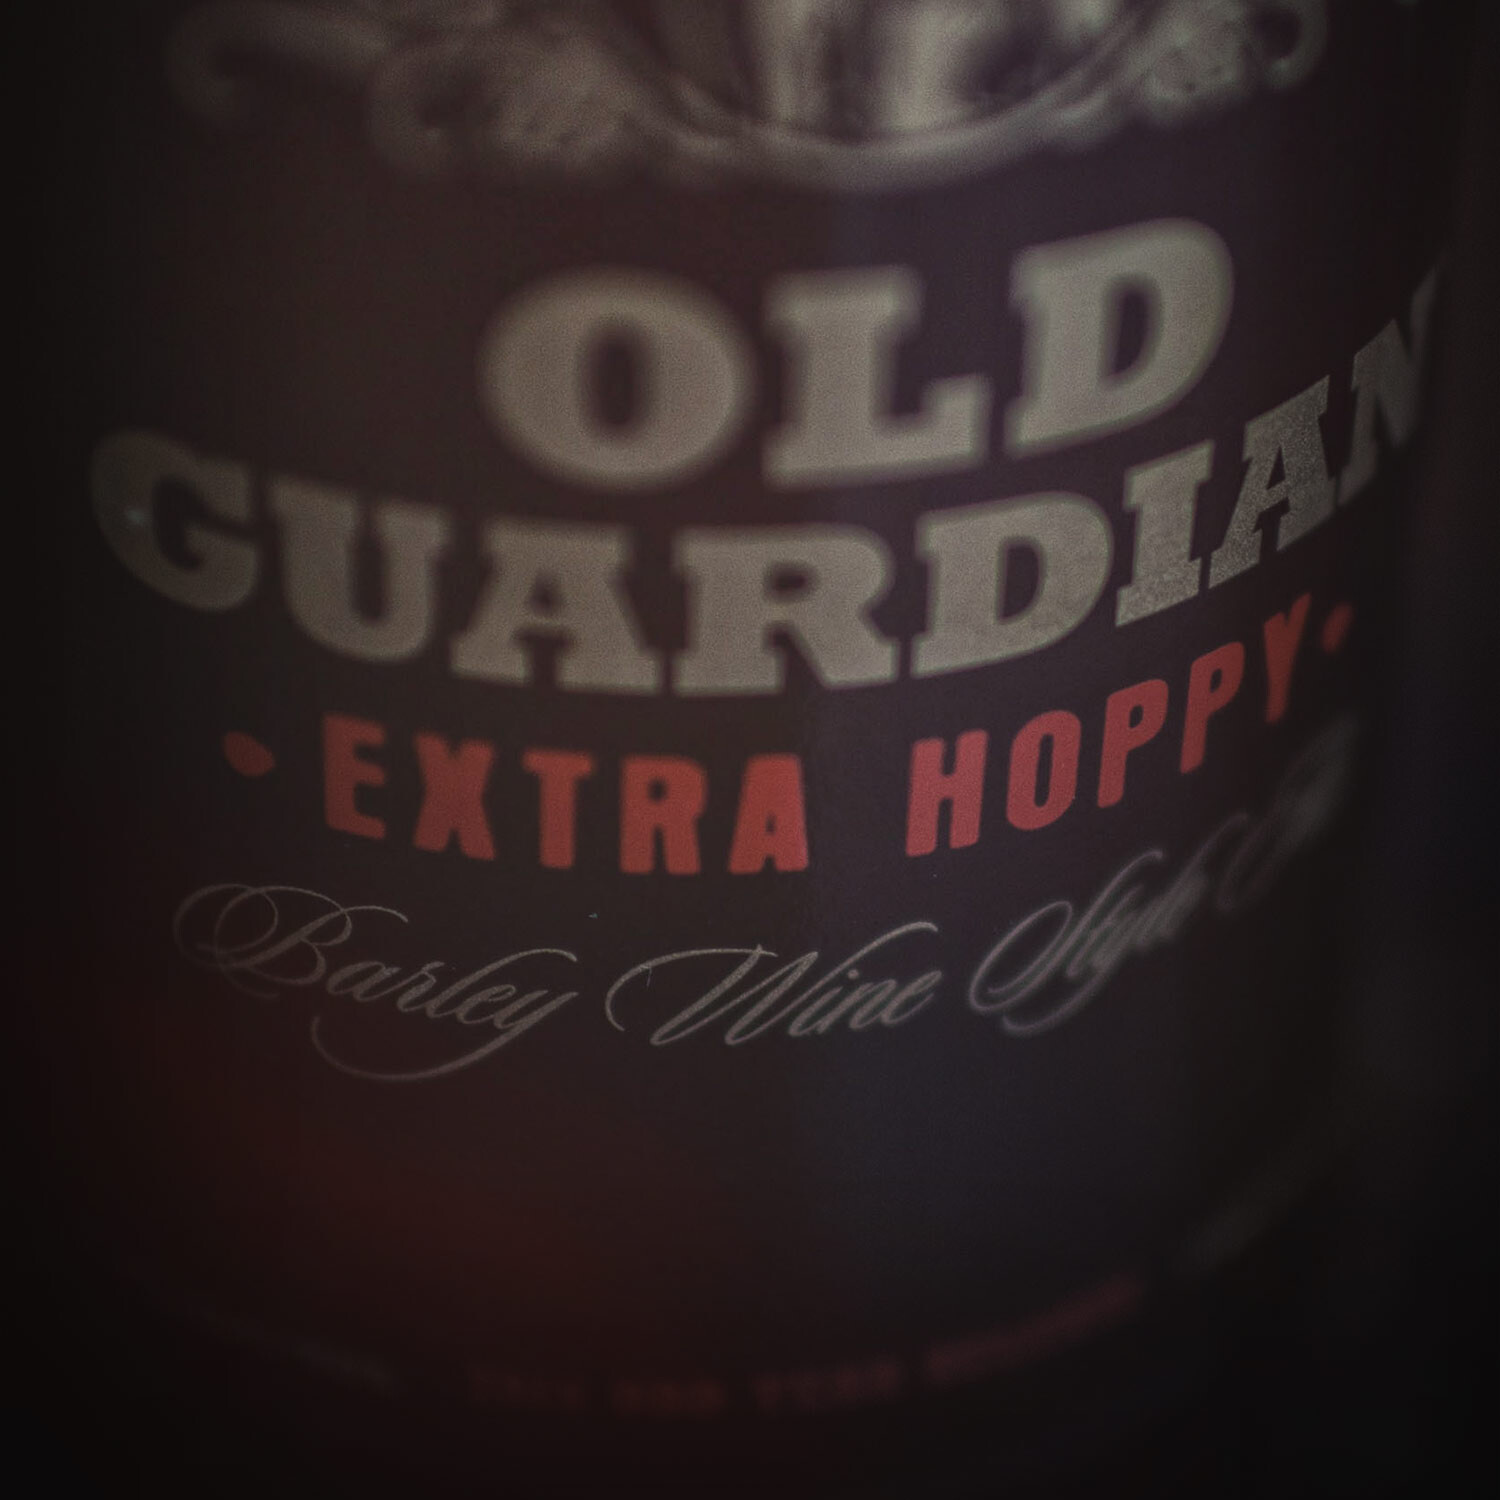 Stone Old Guardian Barley Wine - Extra Hoppy close-up